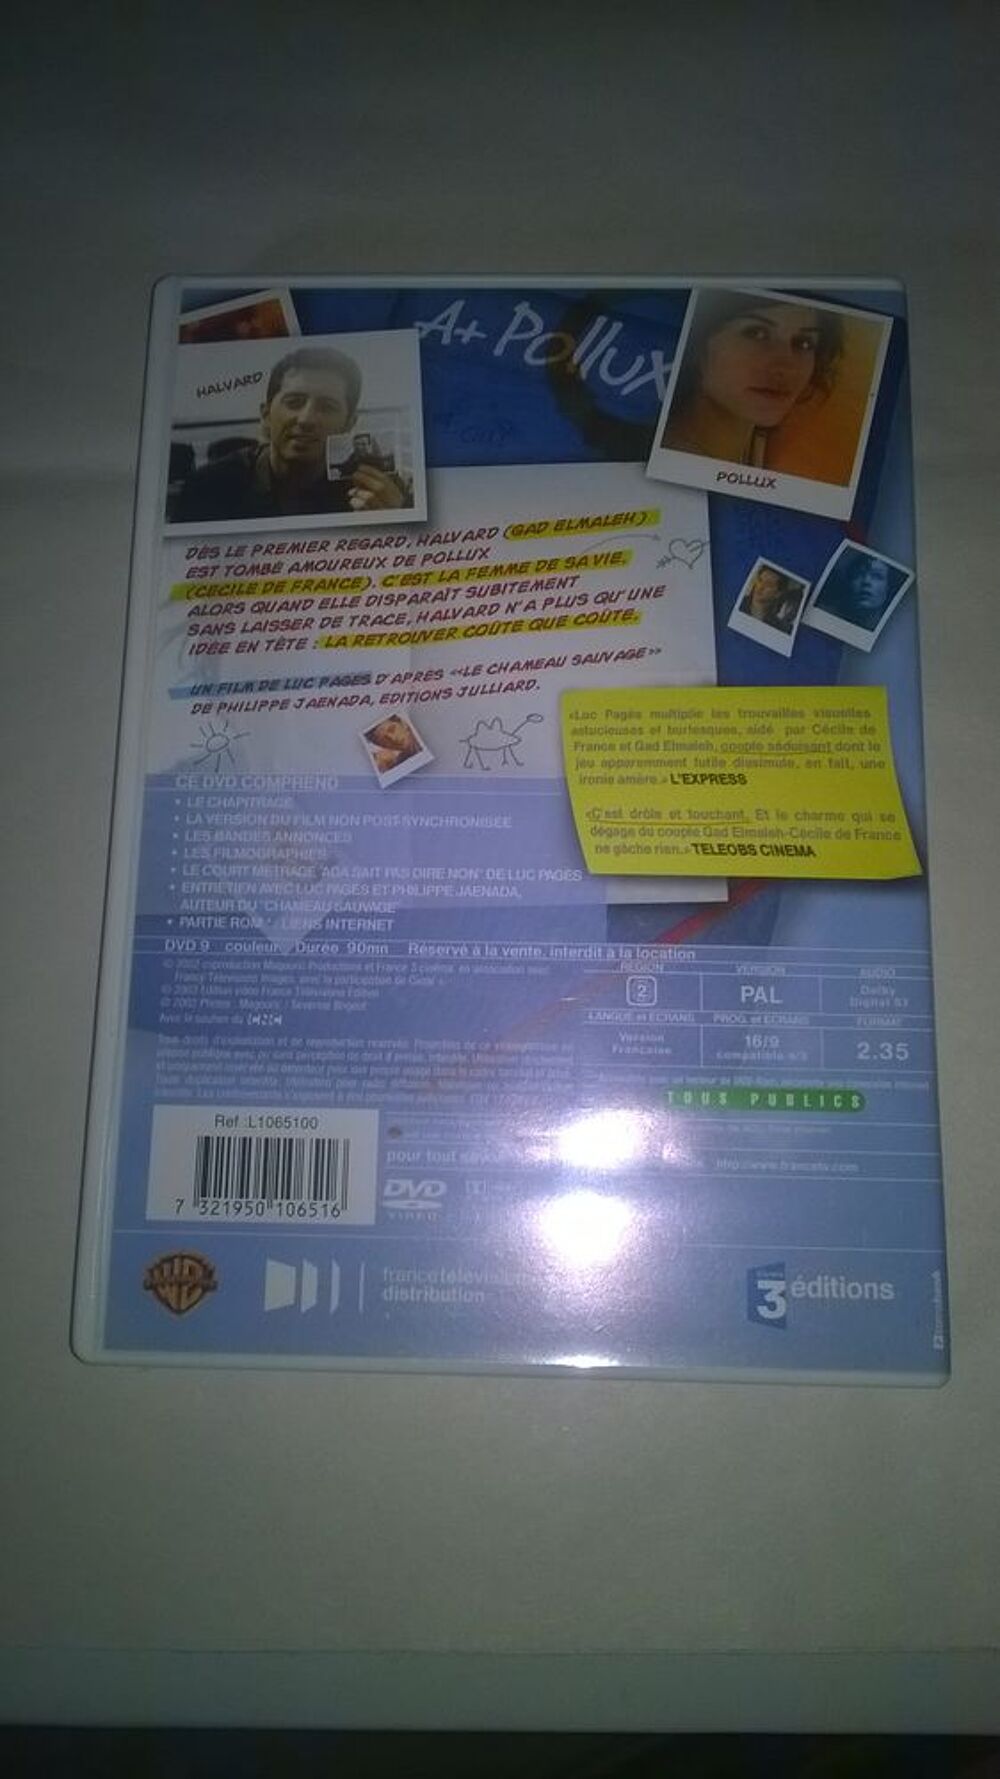 DVD A+ Pollux
Gad Elmaleh - C&eacute;cile De France 
2003
Excell DVD et blu-ray